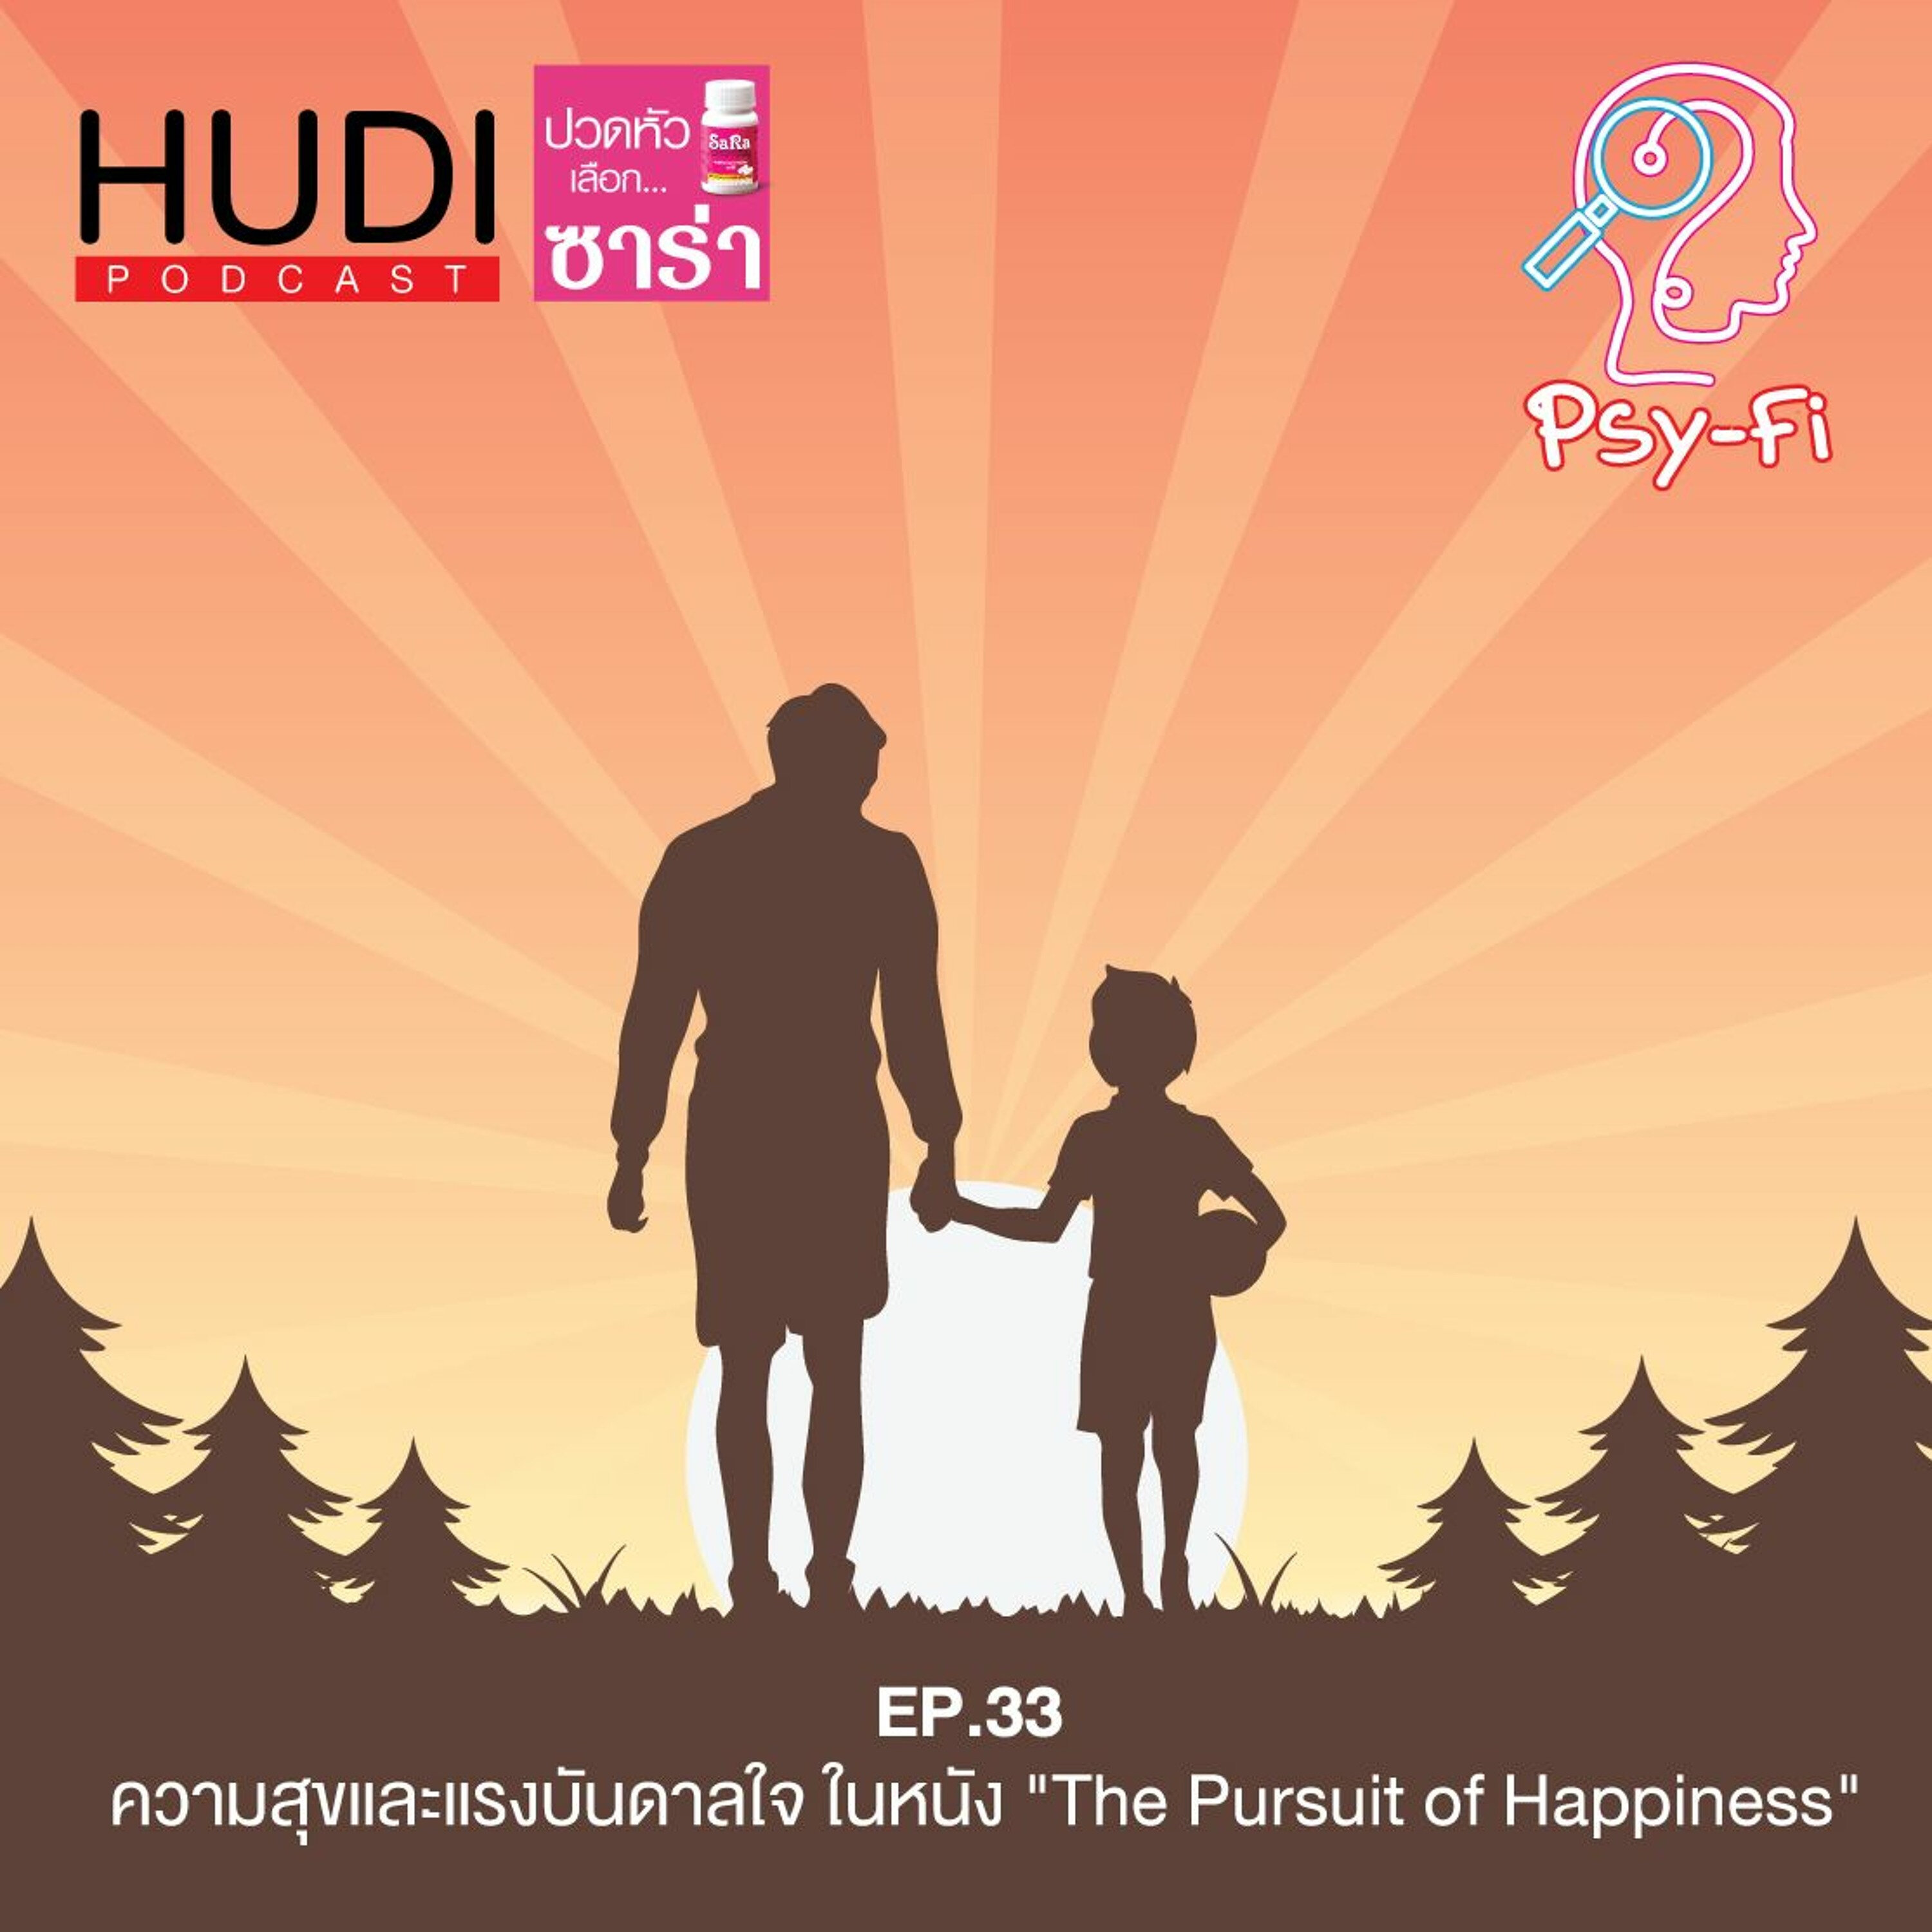 Psy-Fi Ep.33 - ความสุขและแรงบันดาลใจ ในหนัง ”The Pursuit of Happyness”